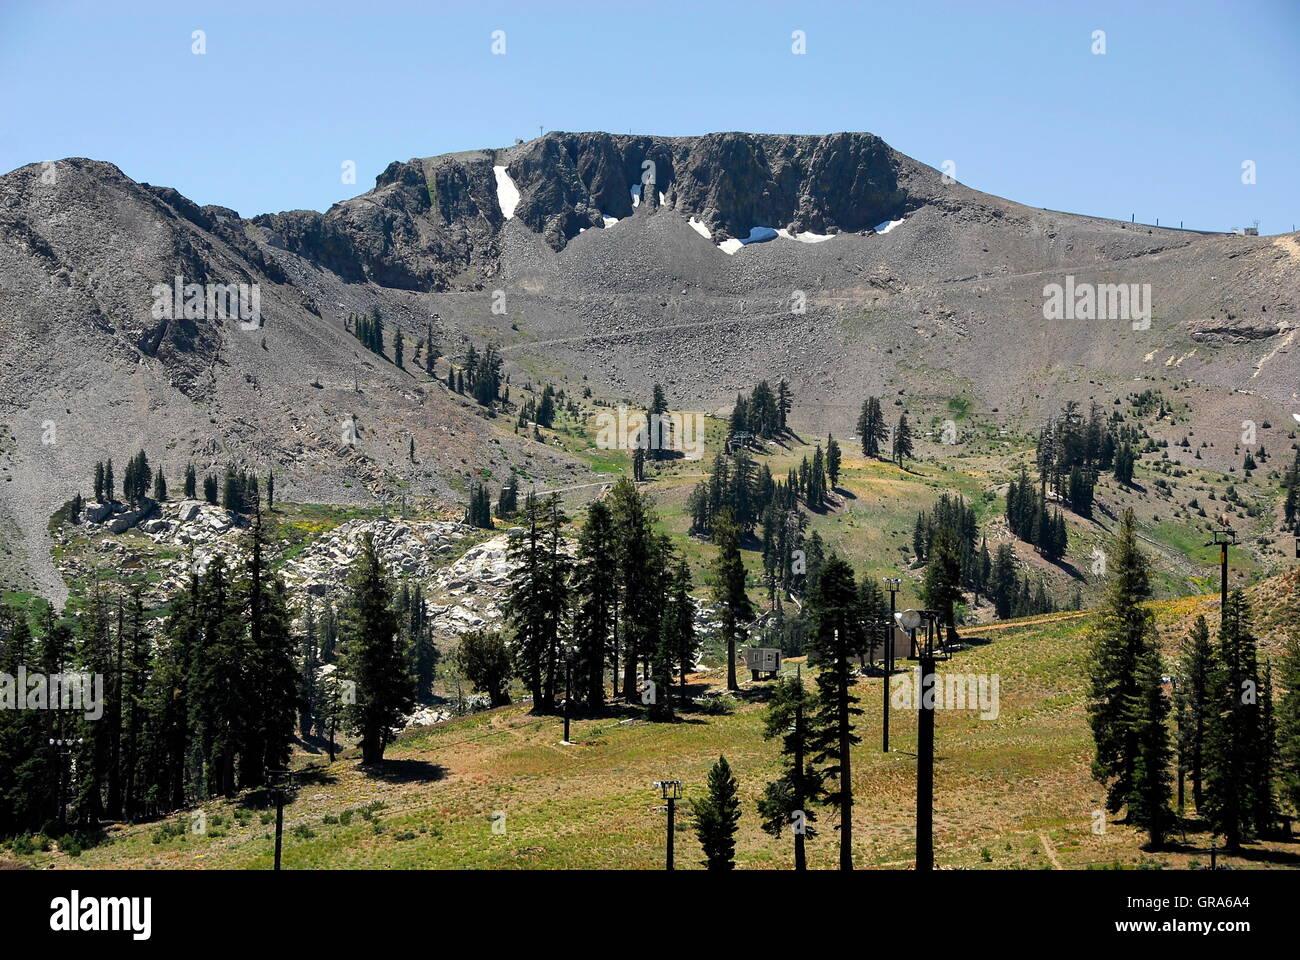 Wandern im Sommer in Squaw Valley Ski Resort bei Olympic Valley, Kalifornien. Blick auf die Palisaden Granitfelsen. Stockfoto